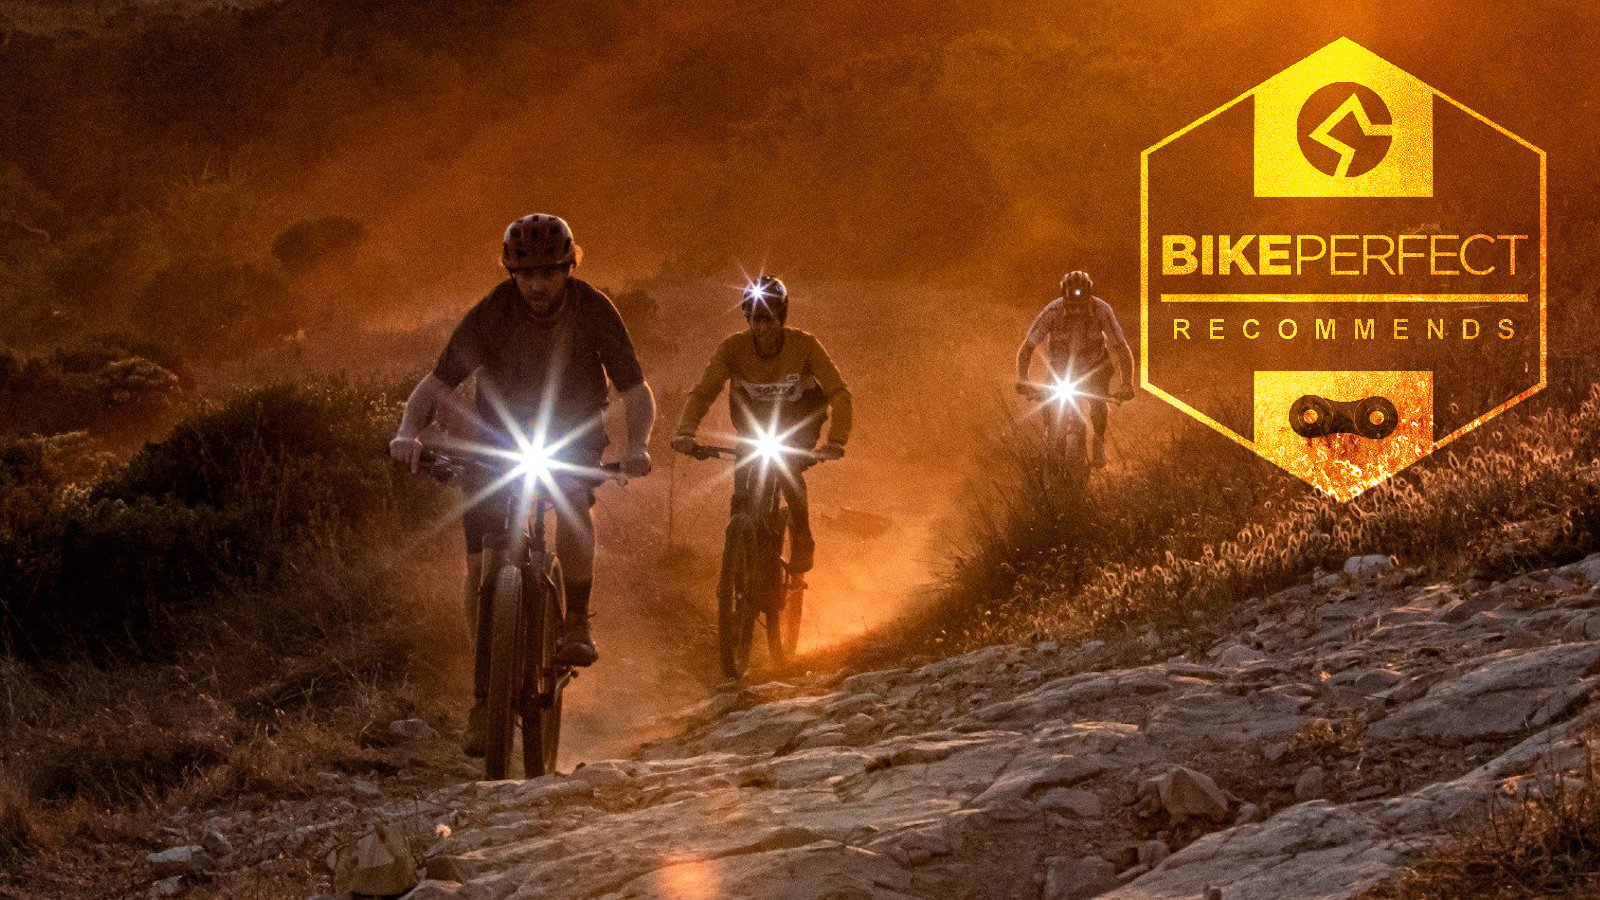 budget mountain bike lights after dark for less money | BikePerfect